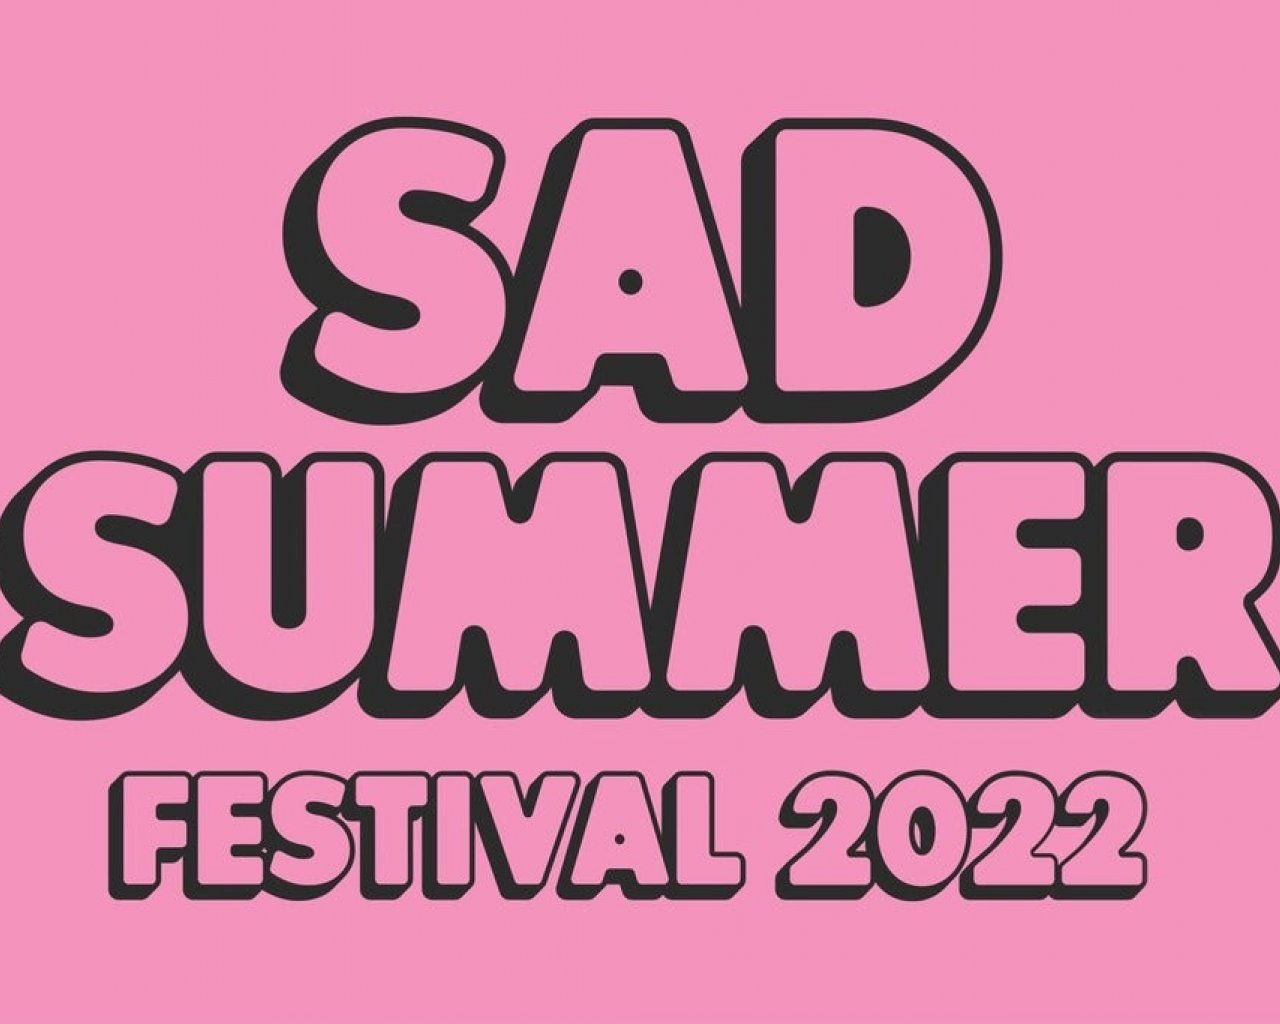 Sad Summer Festival